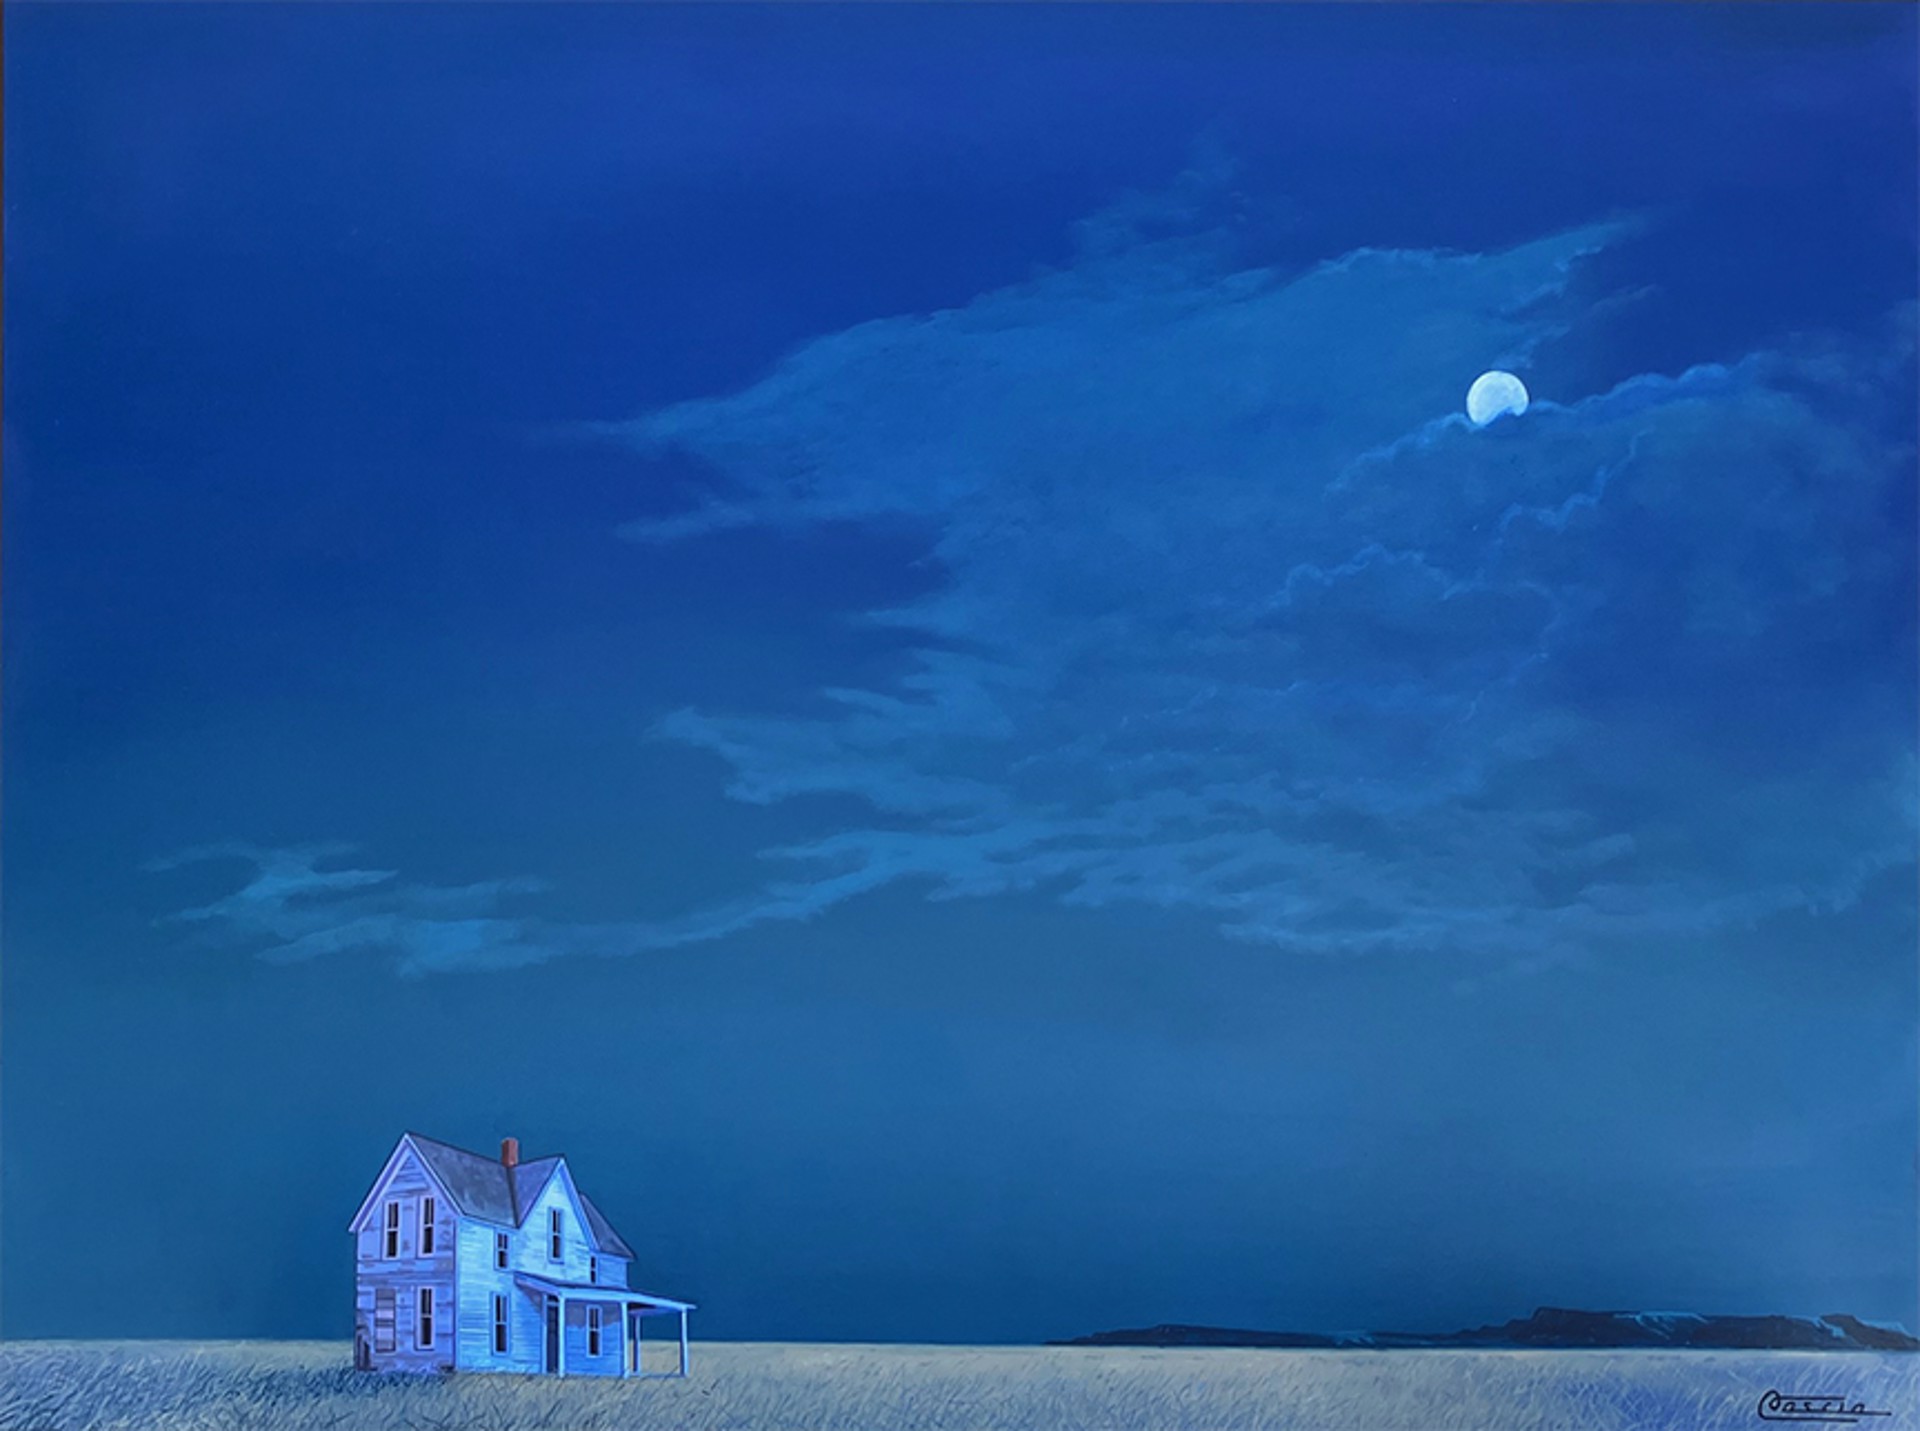 Moonlit by Bruce Cascia